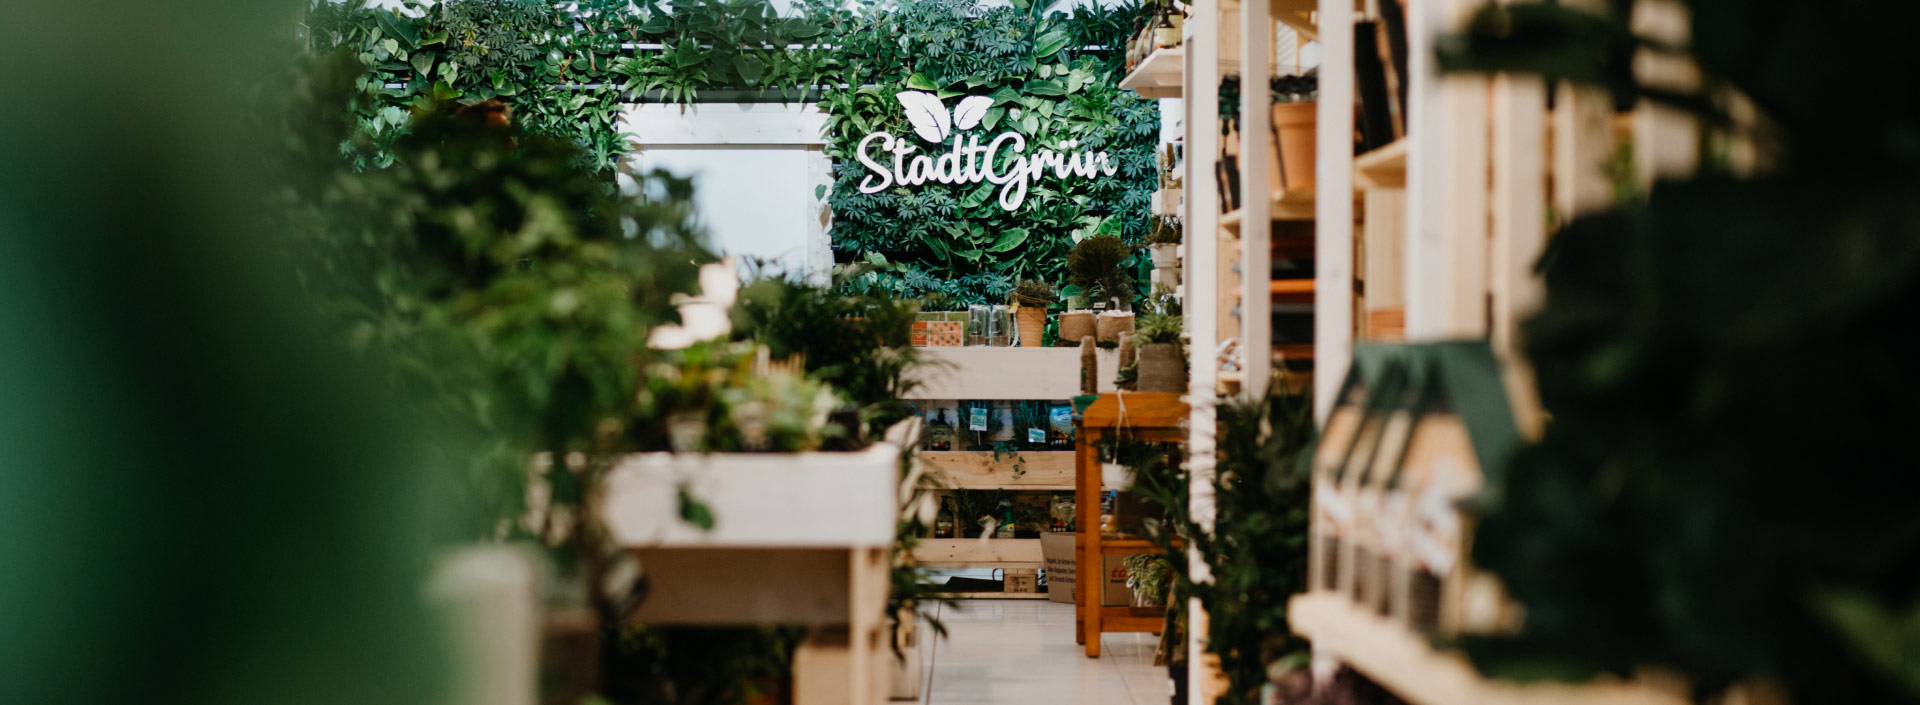 Thats's Retail! - Customer Stadtgrün by toom - Urban-Gardening-Store